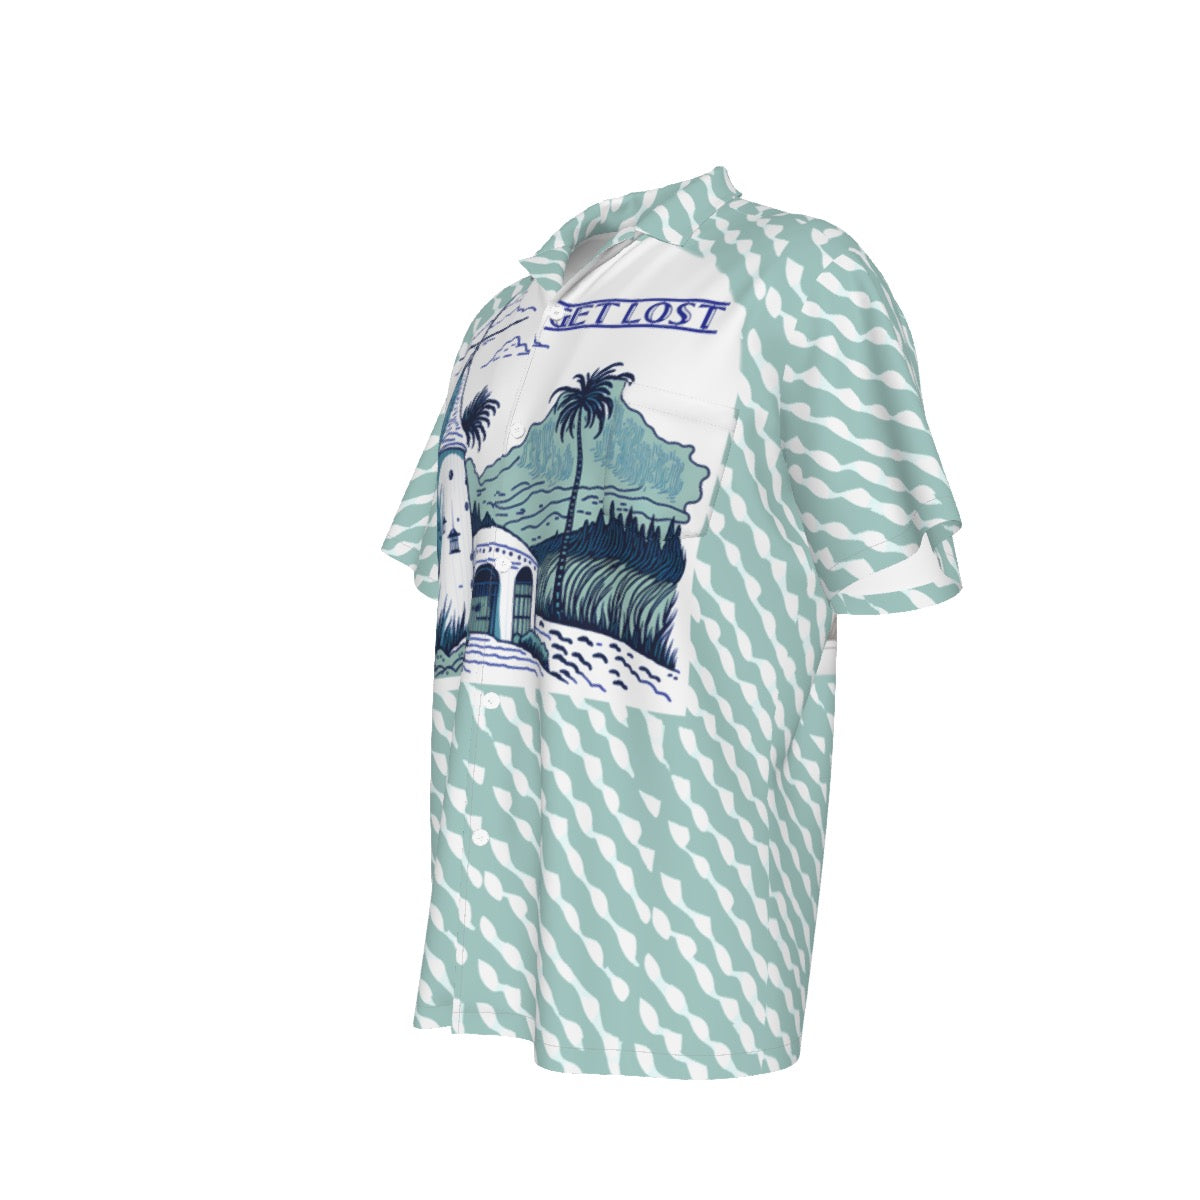 Get Lost -- Men's Hawaiian Shirt With Pocket